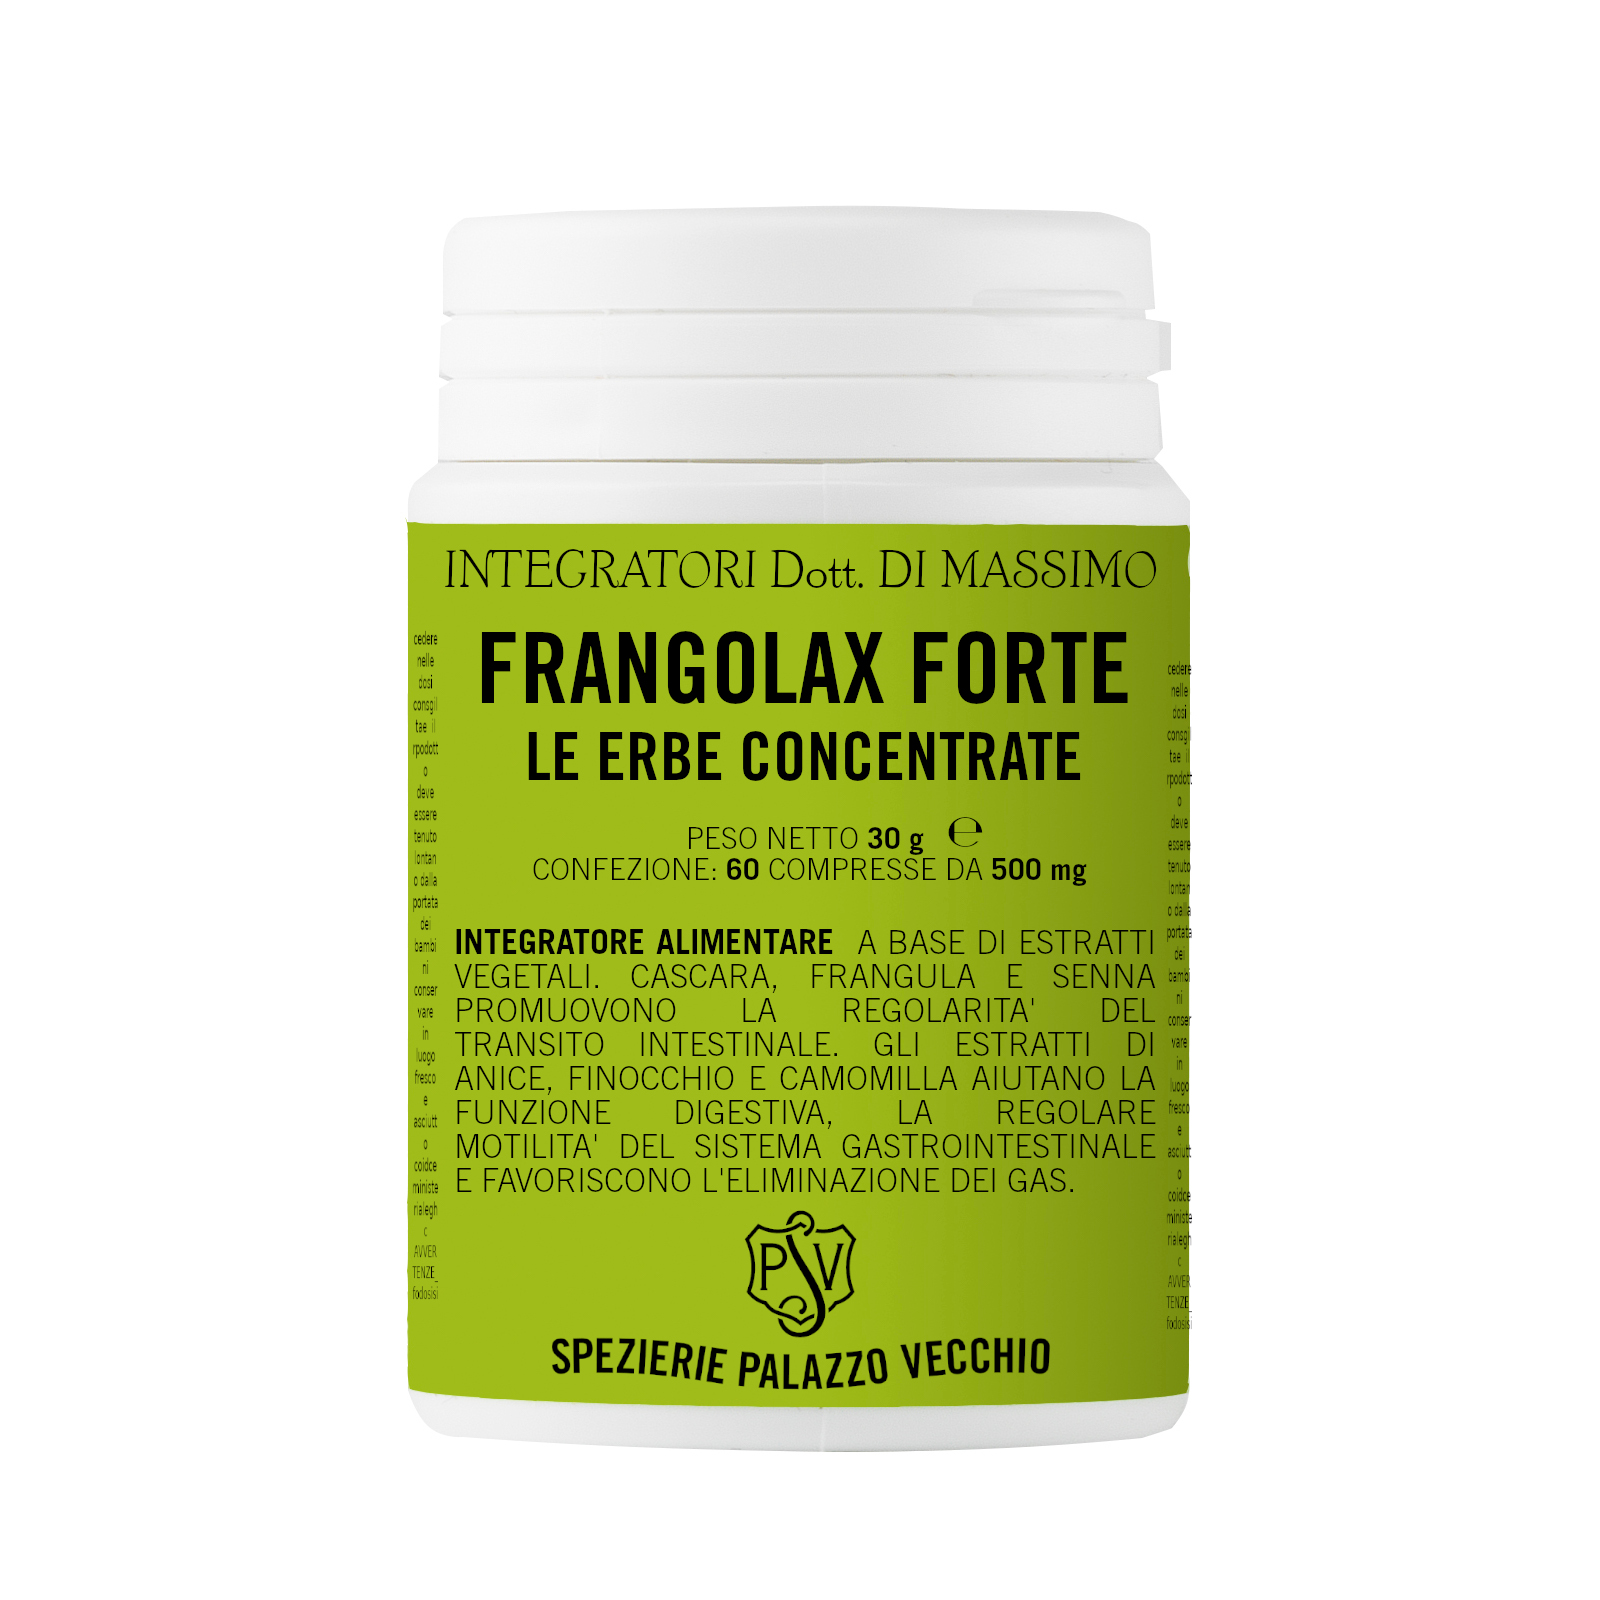 FRANGOLAX FORTE Le erbe concentrate-0